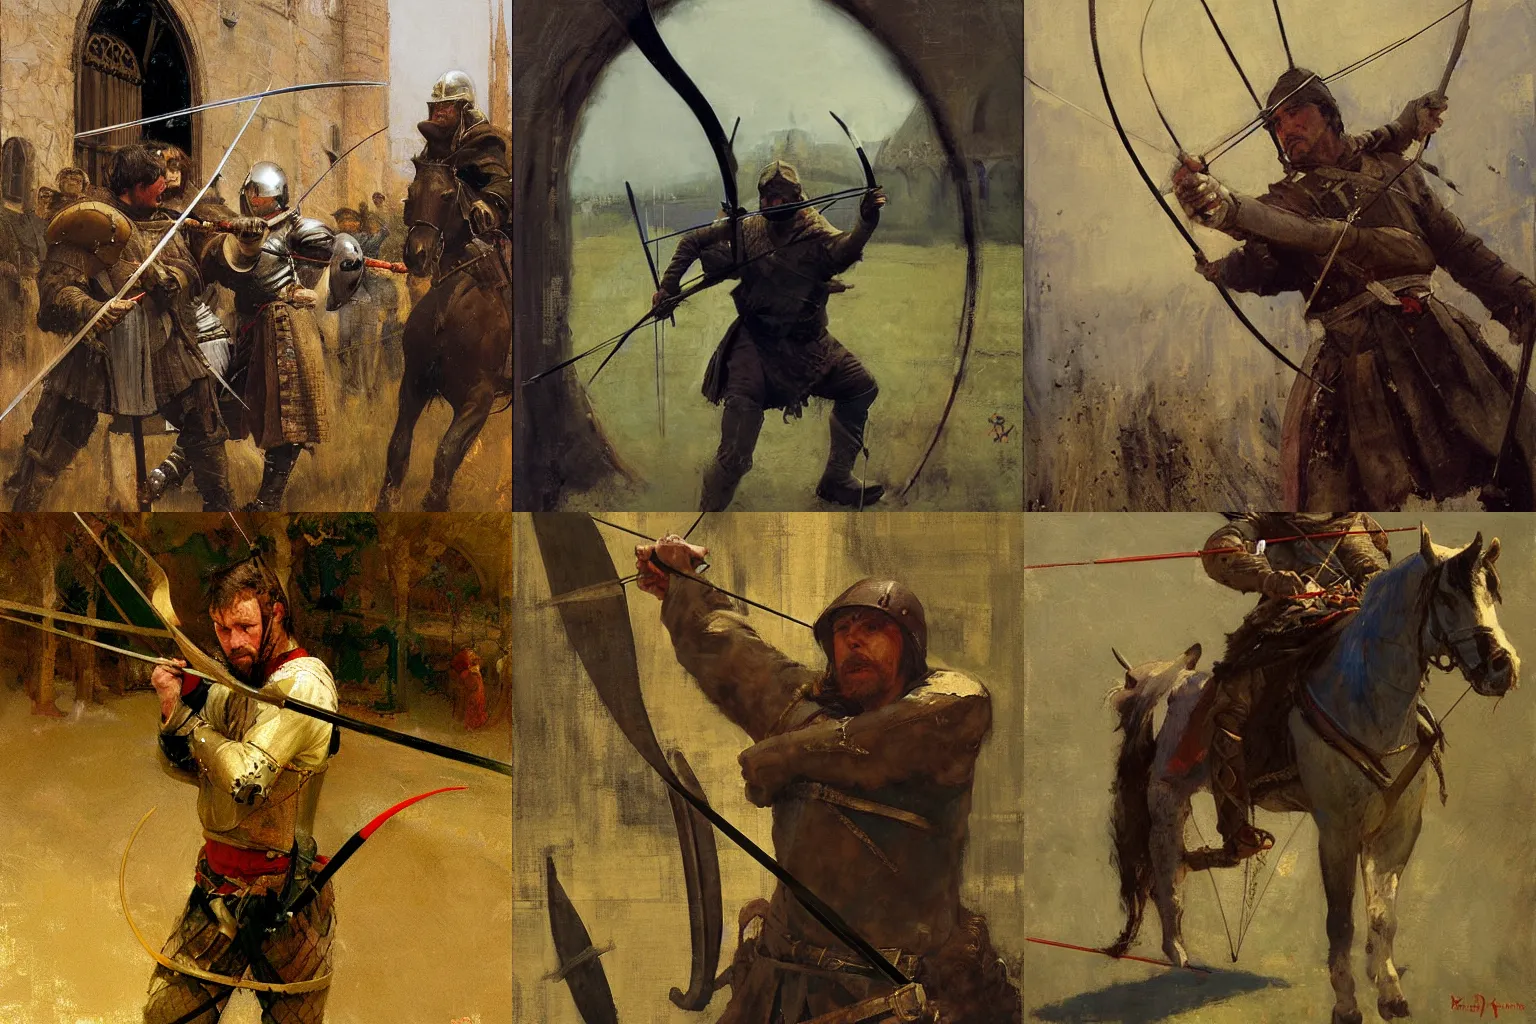 Prompt: medieval archer, richard schmid, jeffery catherine jones, ruan jia, greg manchess, ridley scott, n. c. wyeth